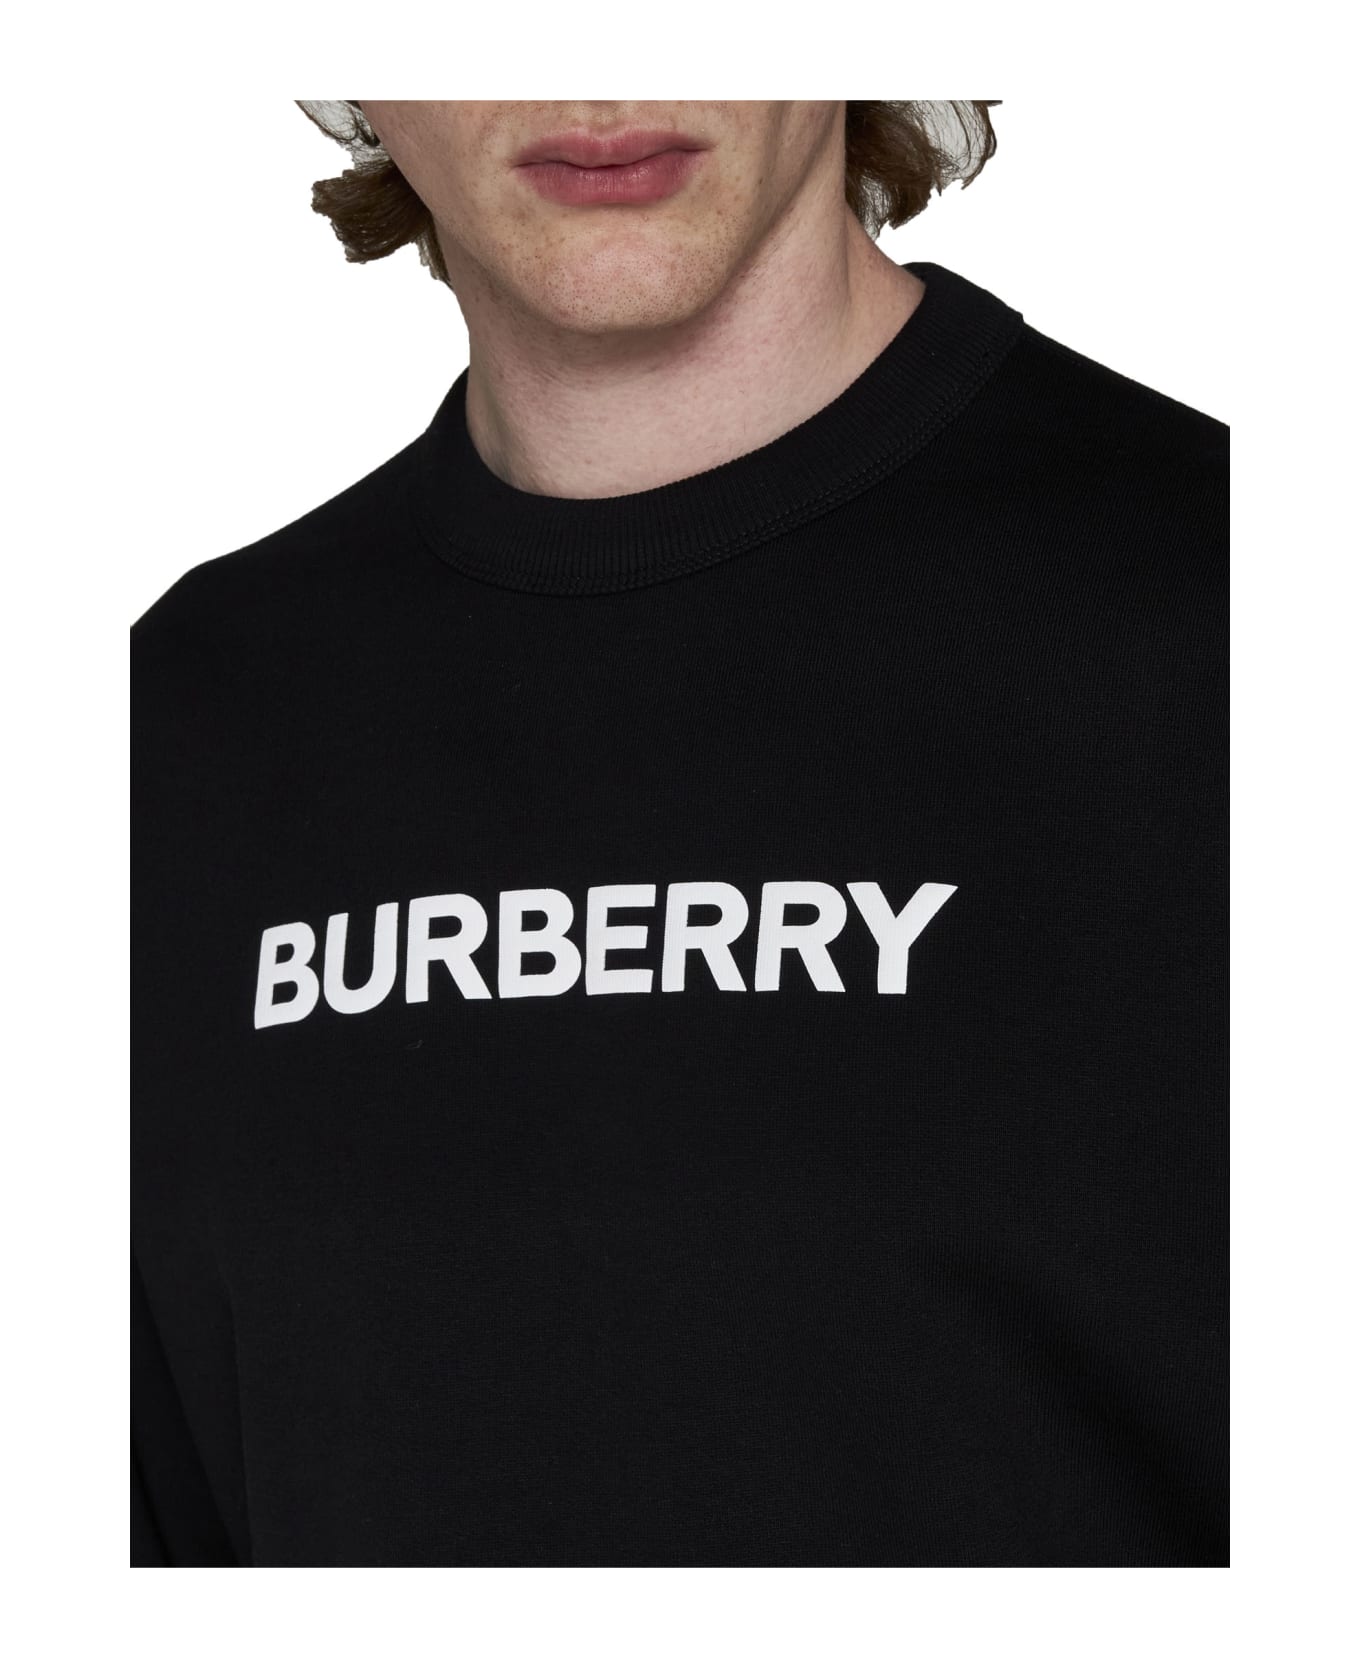 Burberry Sweatshirt - Black